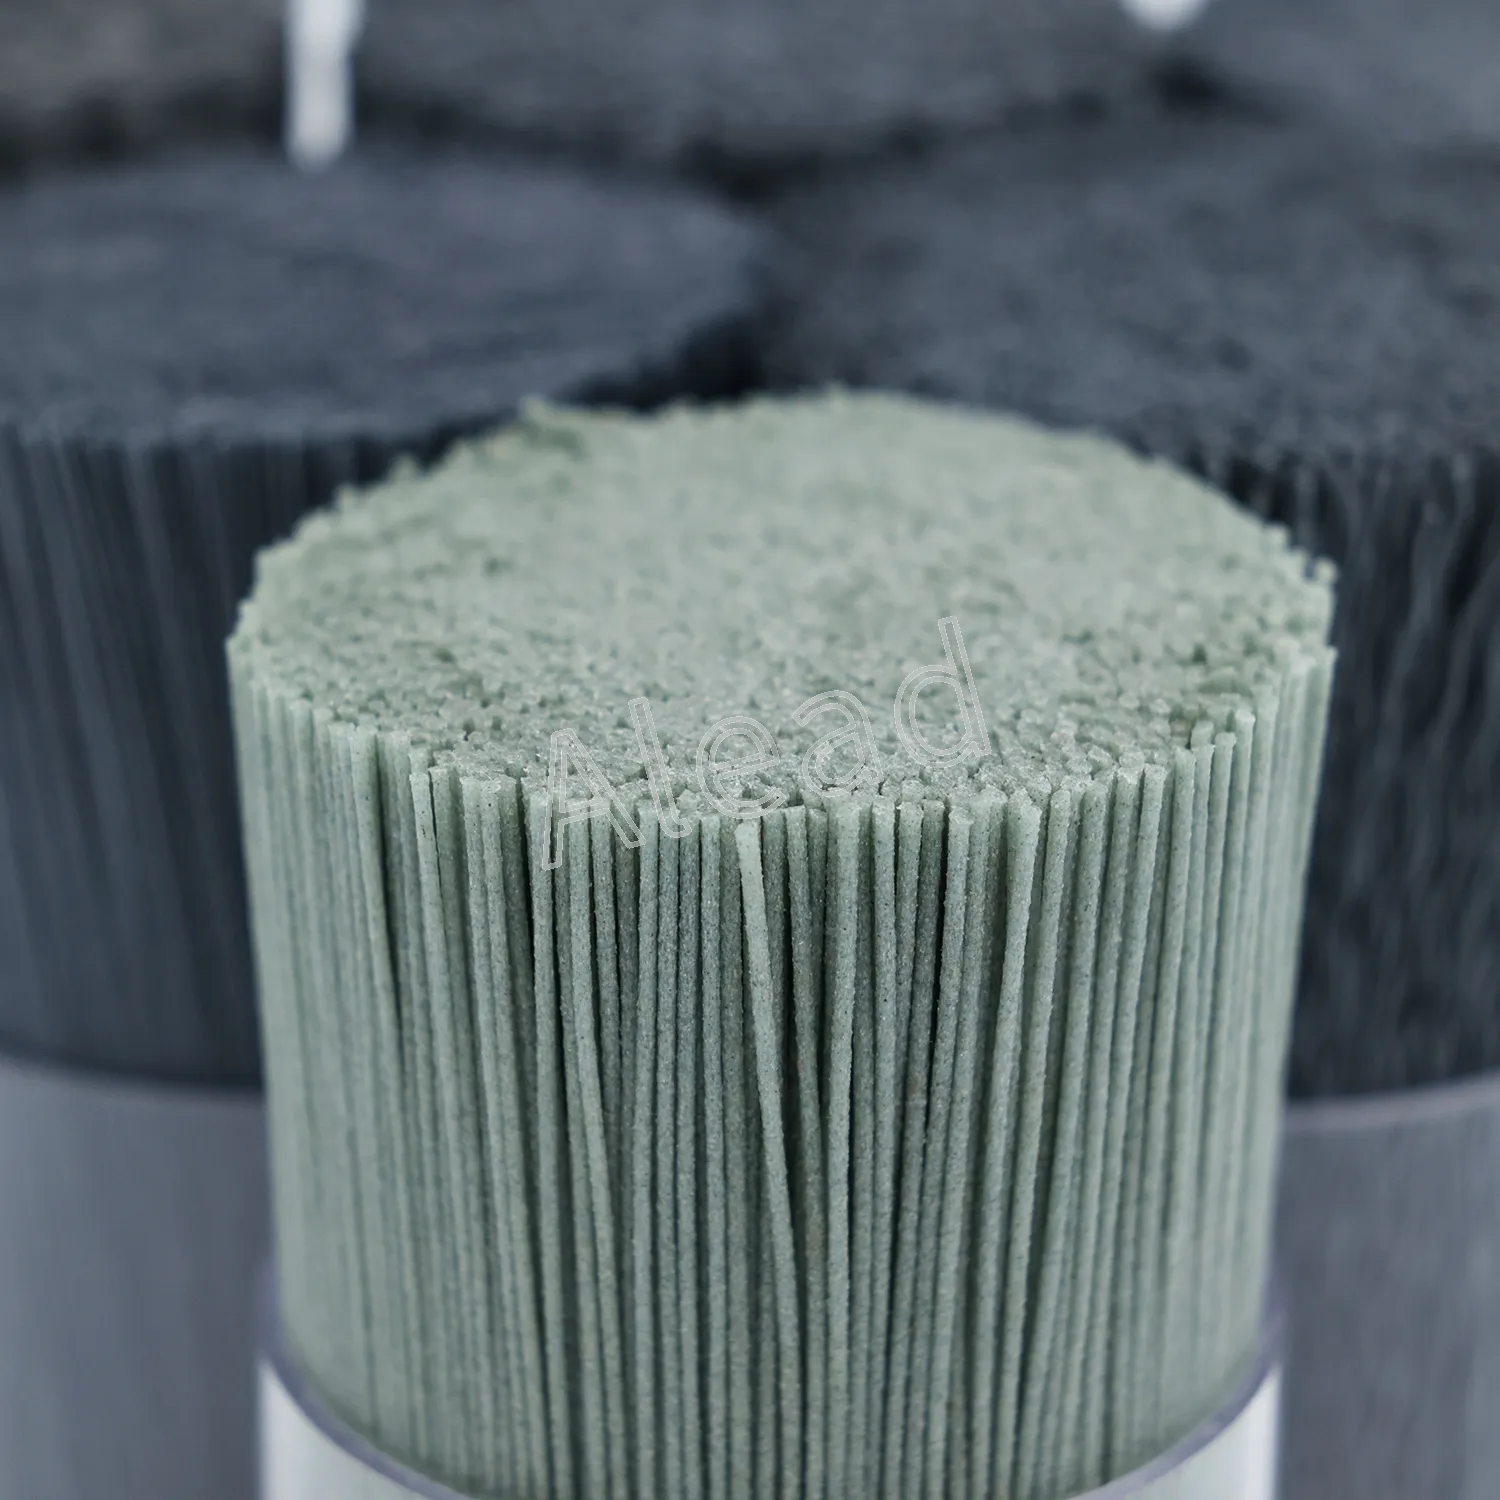 कम कीमत सिलिकॉन कार्बाइड फाइबर एल्यूमीनियम ऑक्साइड तंतु के लिए घर्षण नायलॉन लकड़ी कपड़ा पत्थर स्टील चमकाने ब्रश